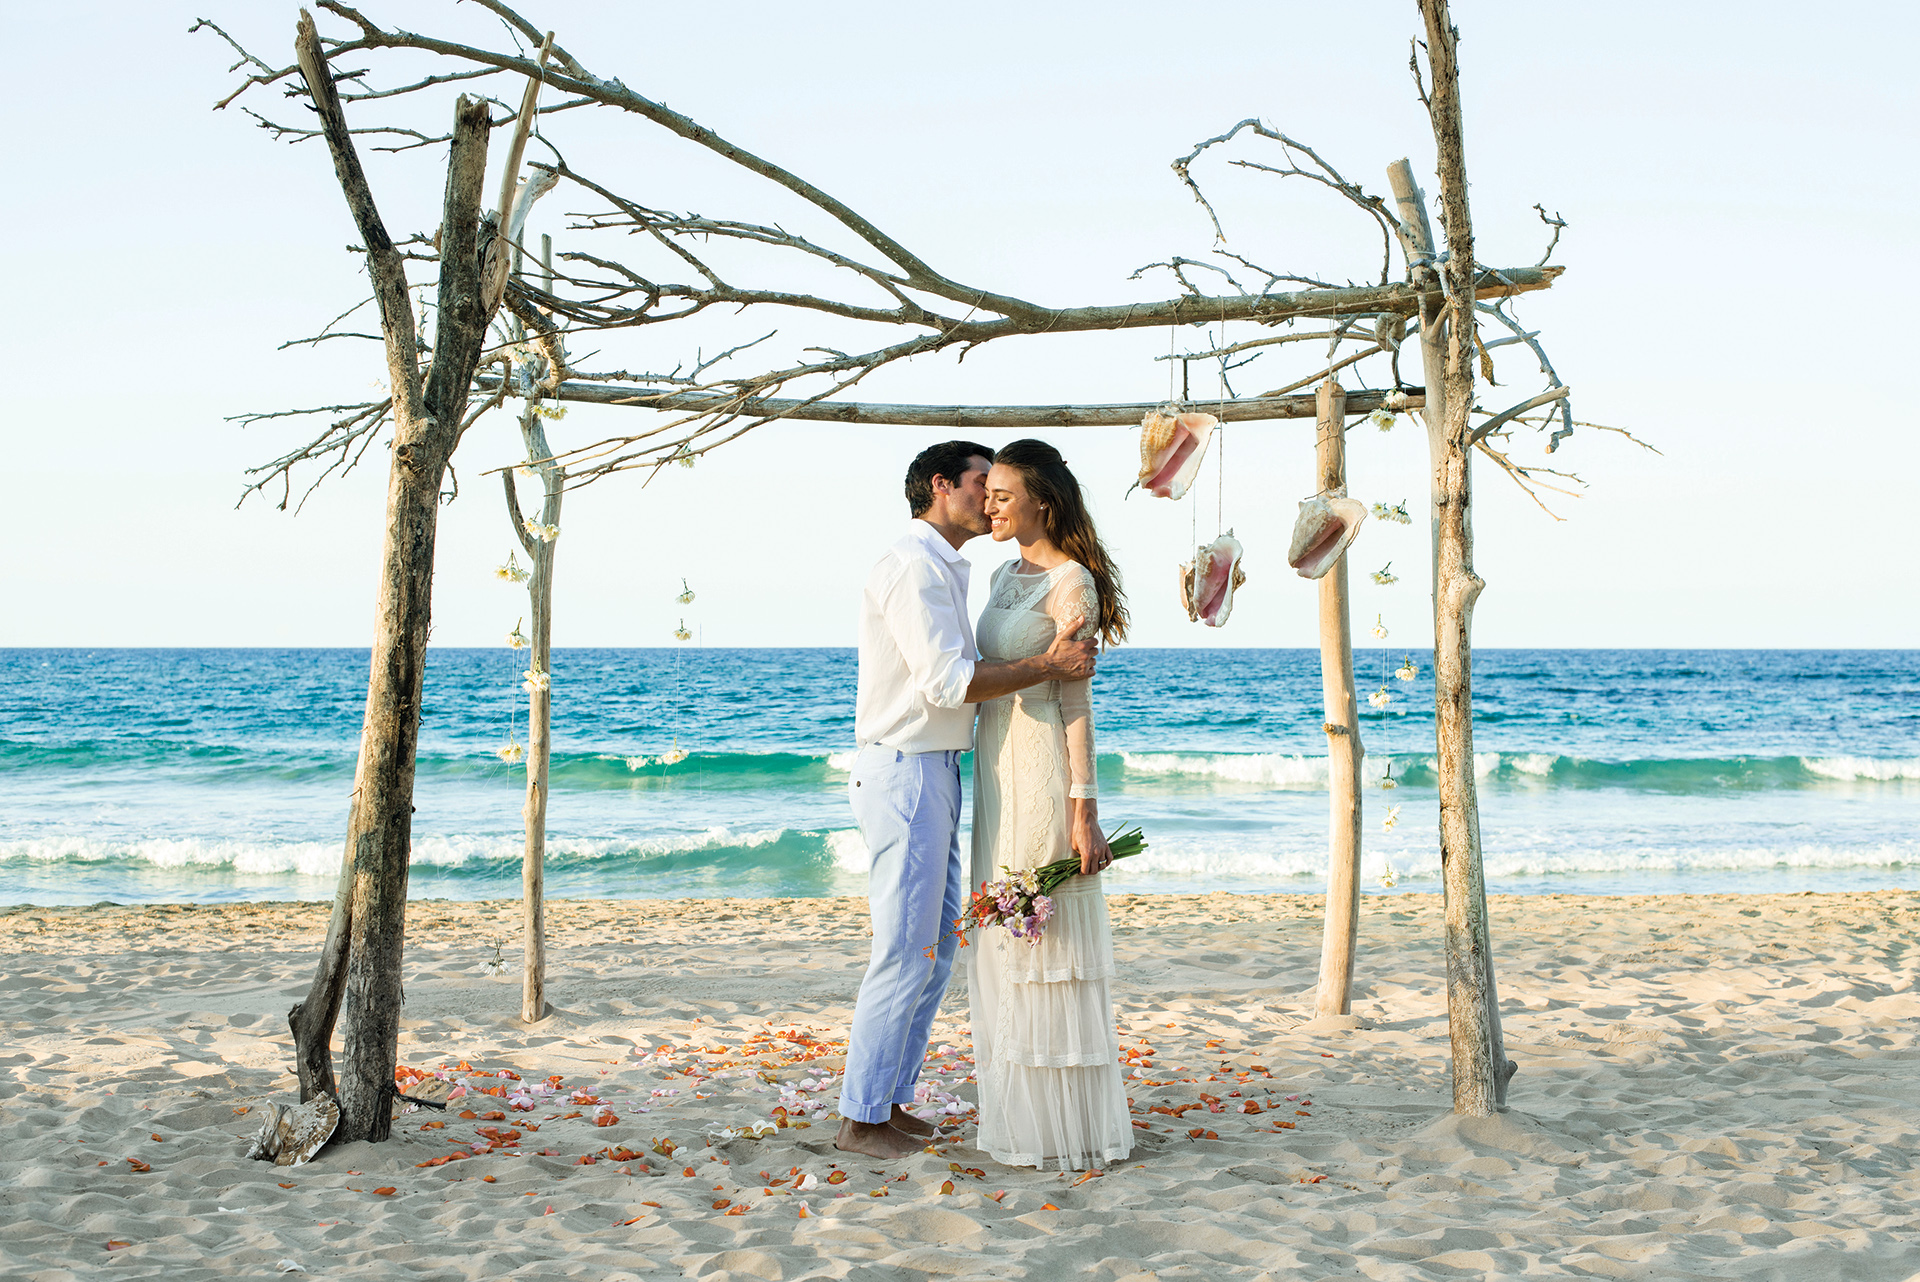 Plan the Best Dominican Republic Destination Wedding